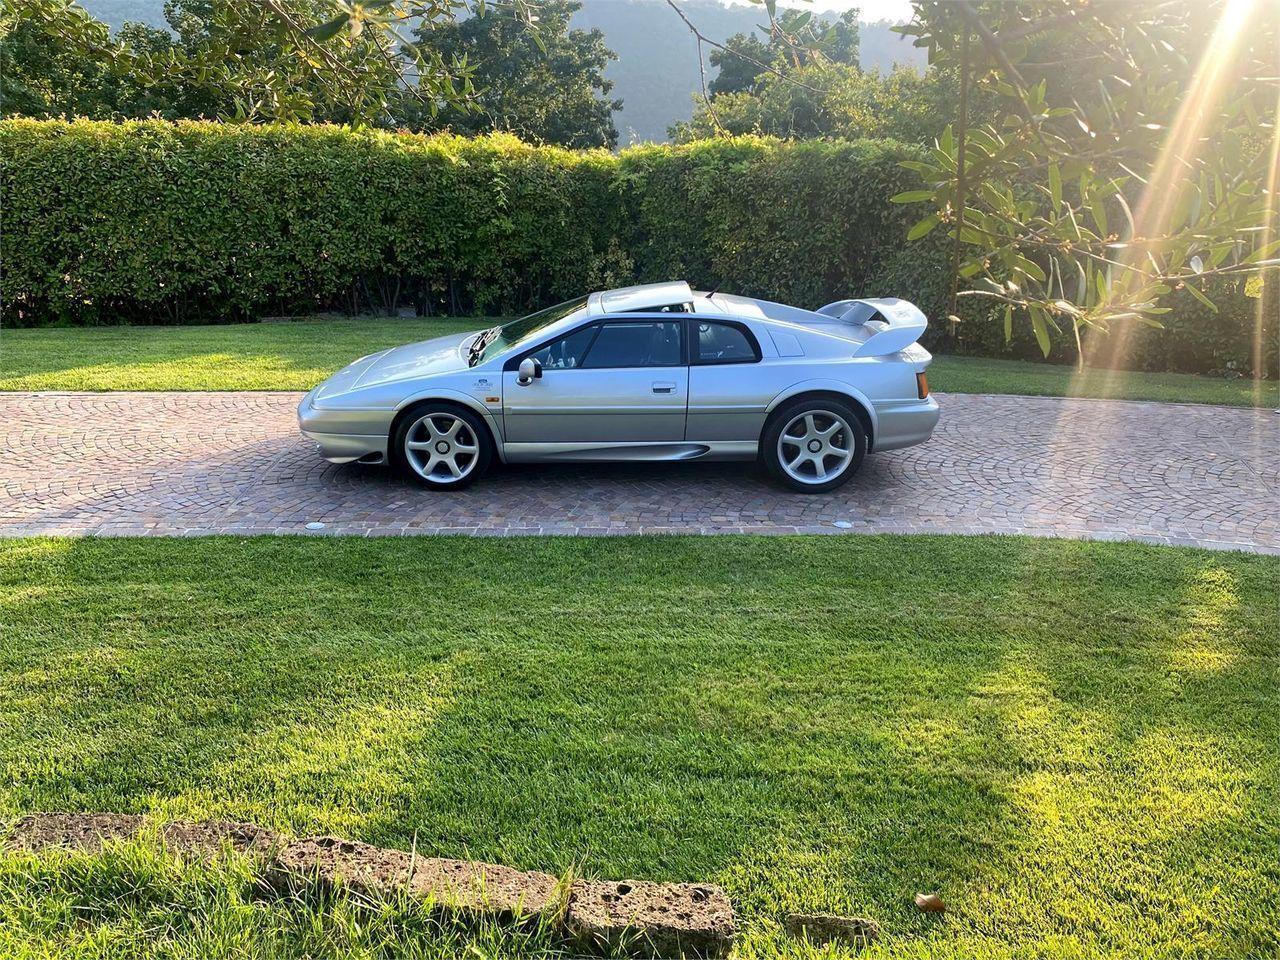 LOTUS Esprit 3.5i V8 turbo